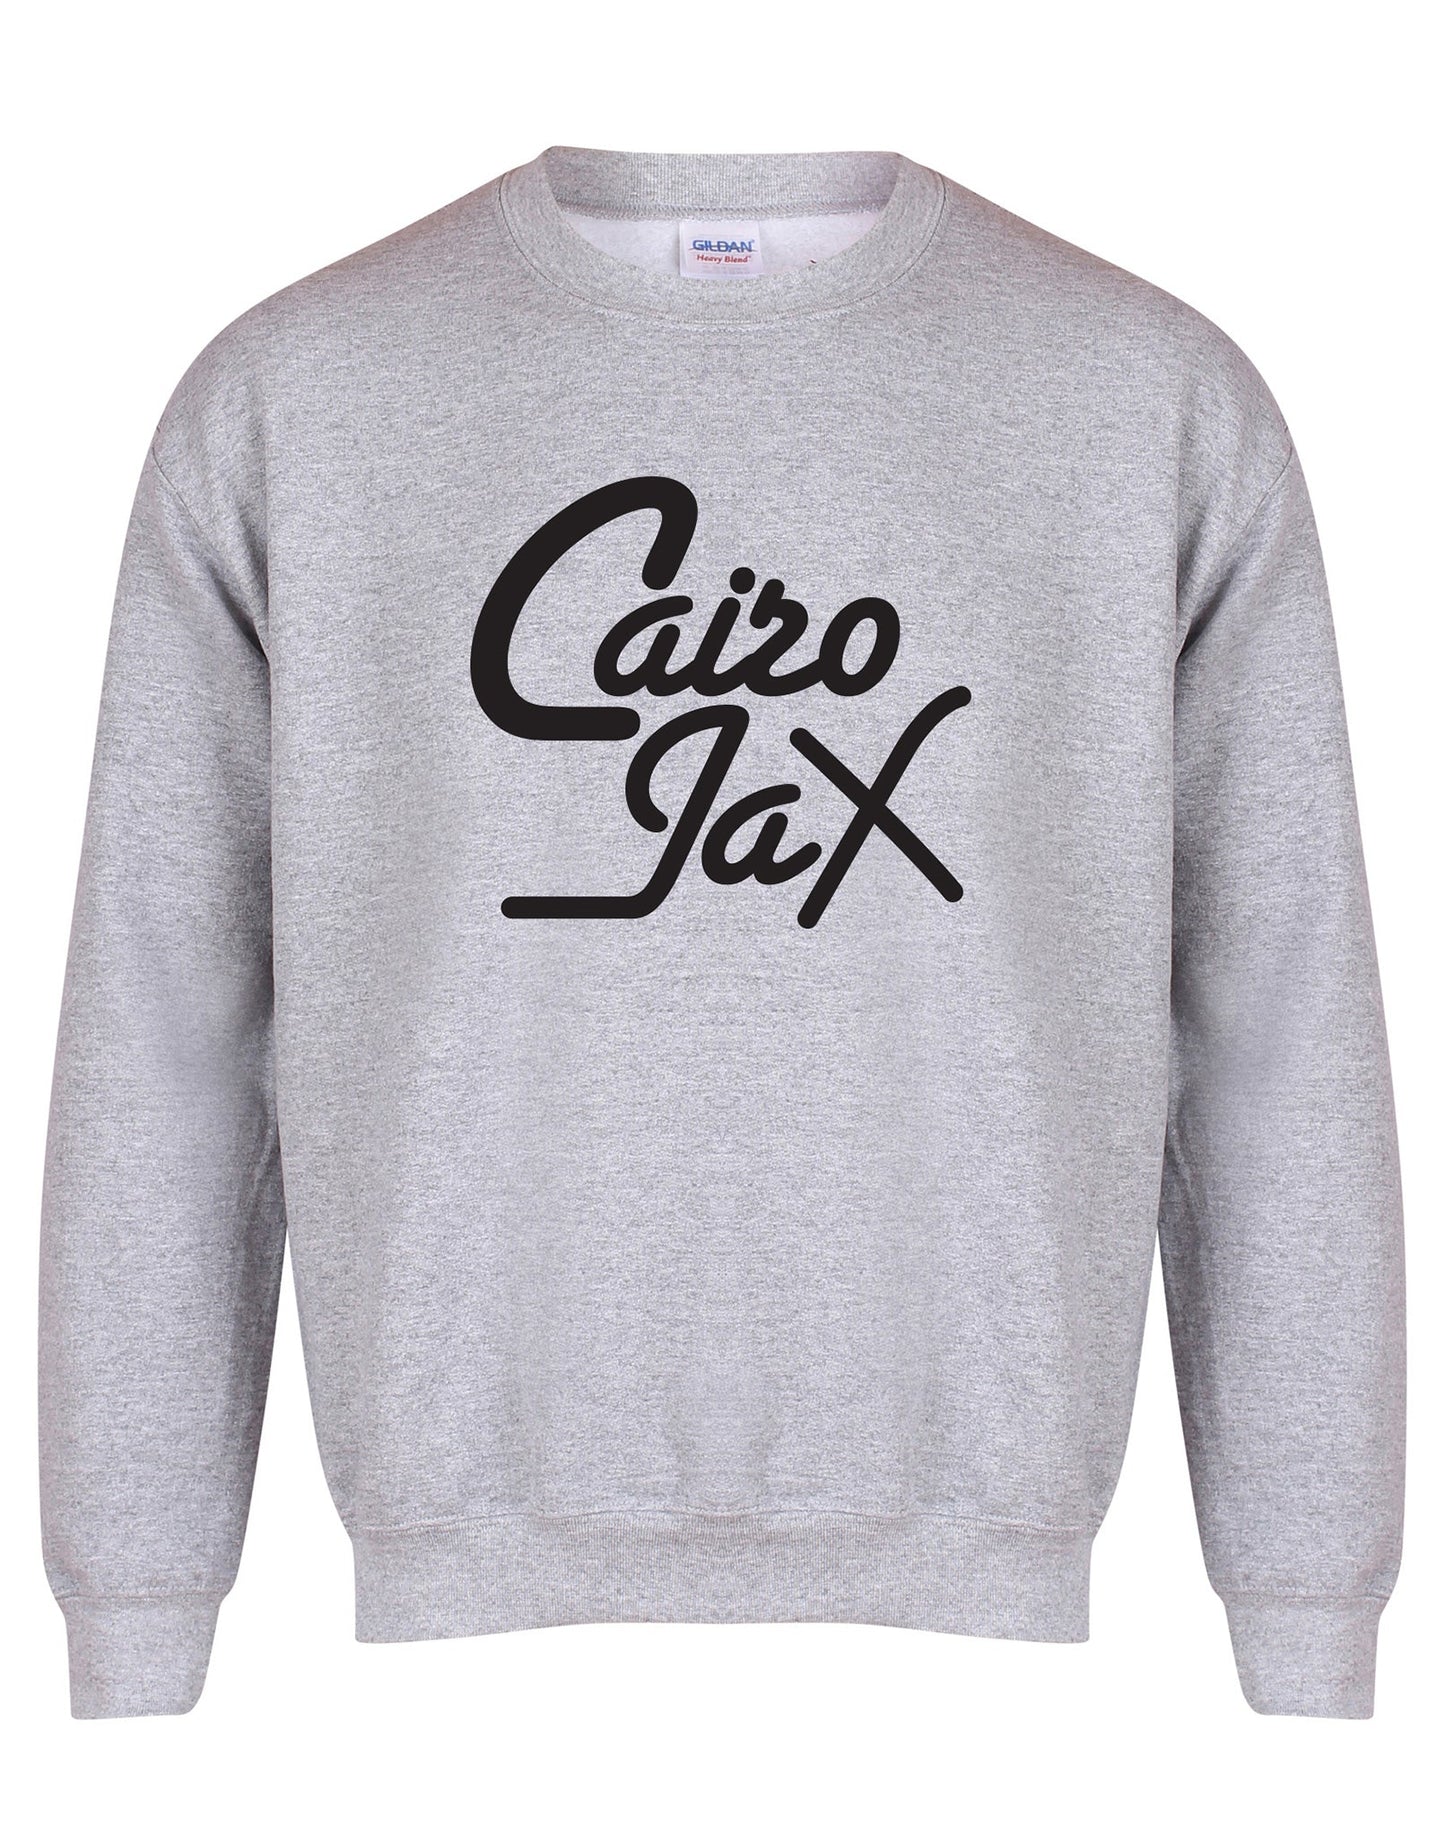 Cairo Jax unisex fit sweatshirt - various colours - Dirty Stop Outs